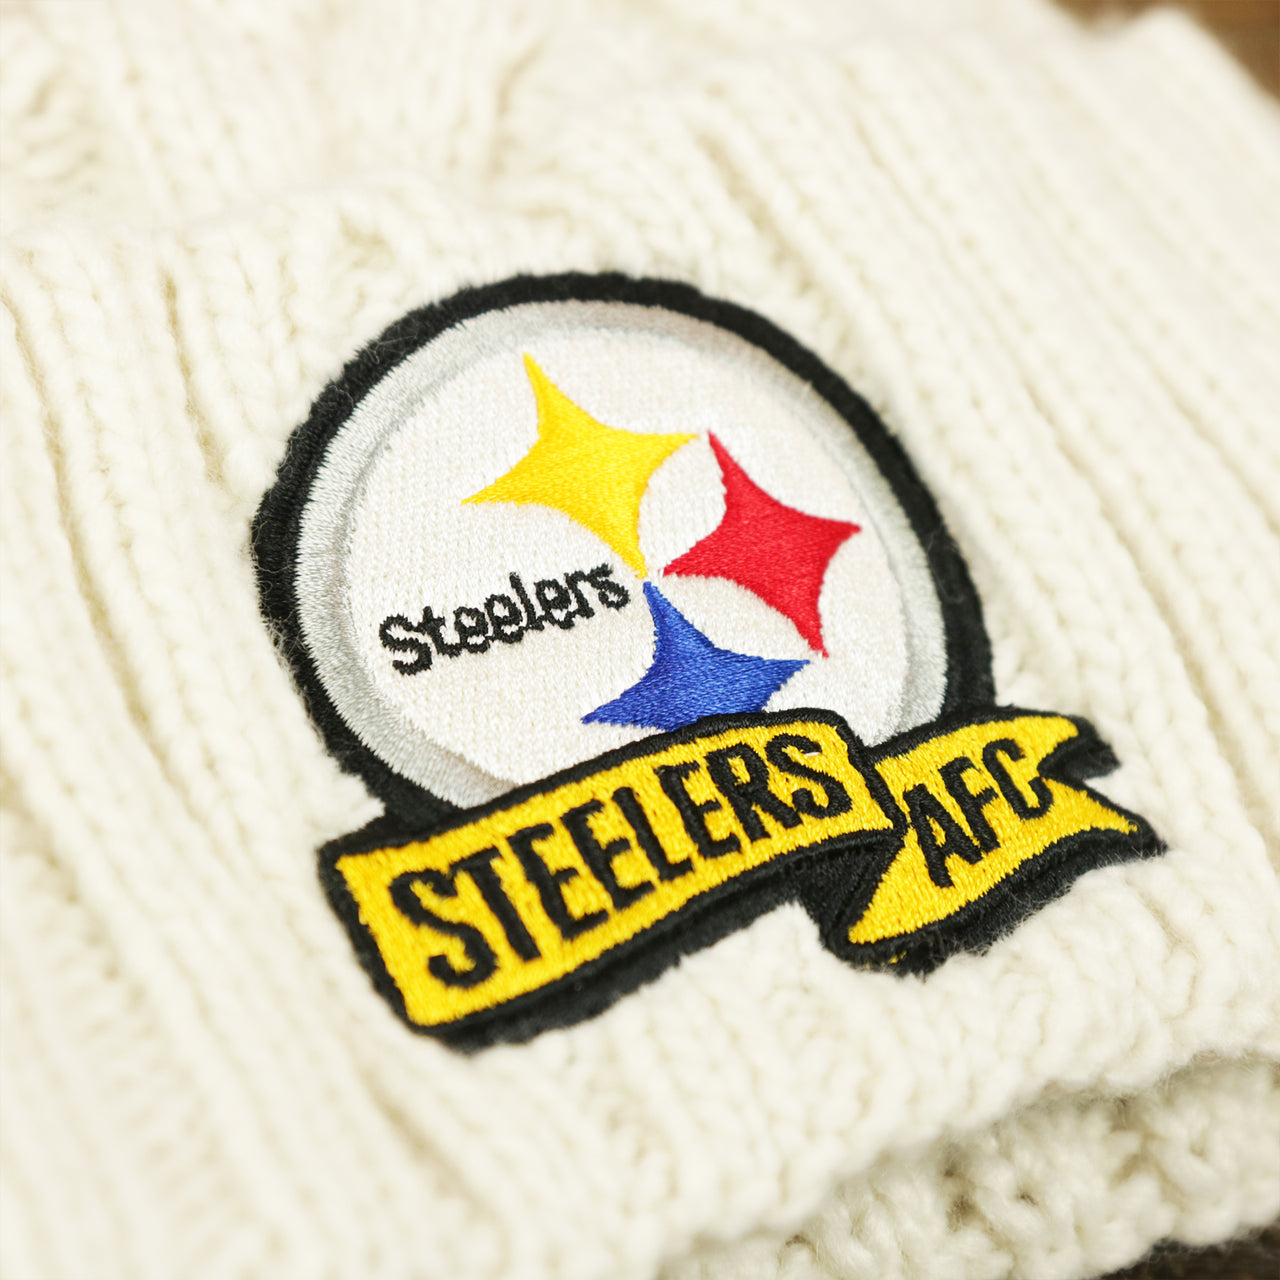 The Steelers AFC Banner on the Kid's Philadelphia Steelers 2022 AFC Cuffed Winter Knit Meeko Pom Pom Beanie | Kid's White Winter Beanies